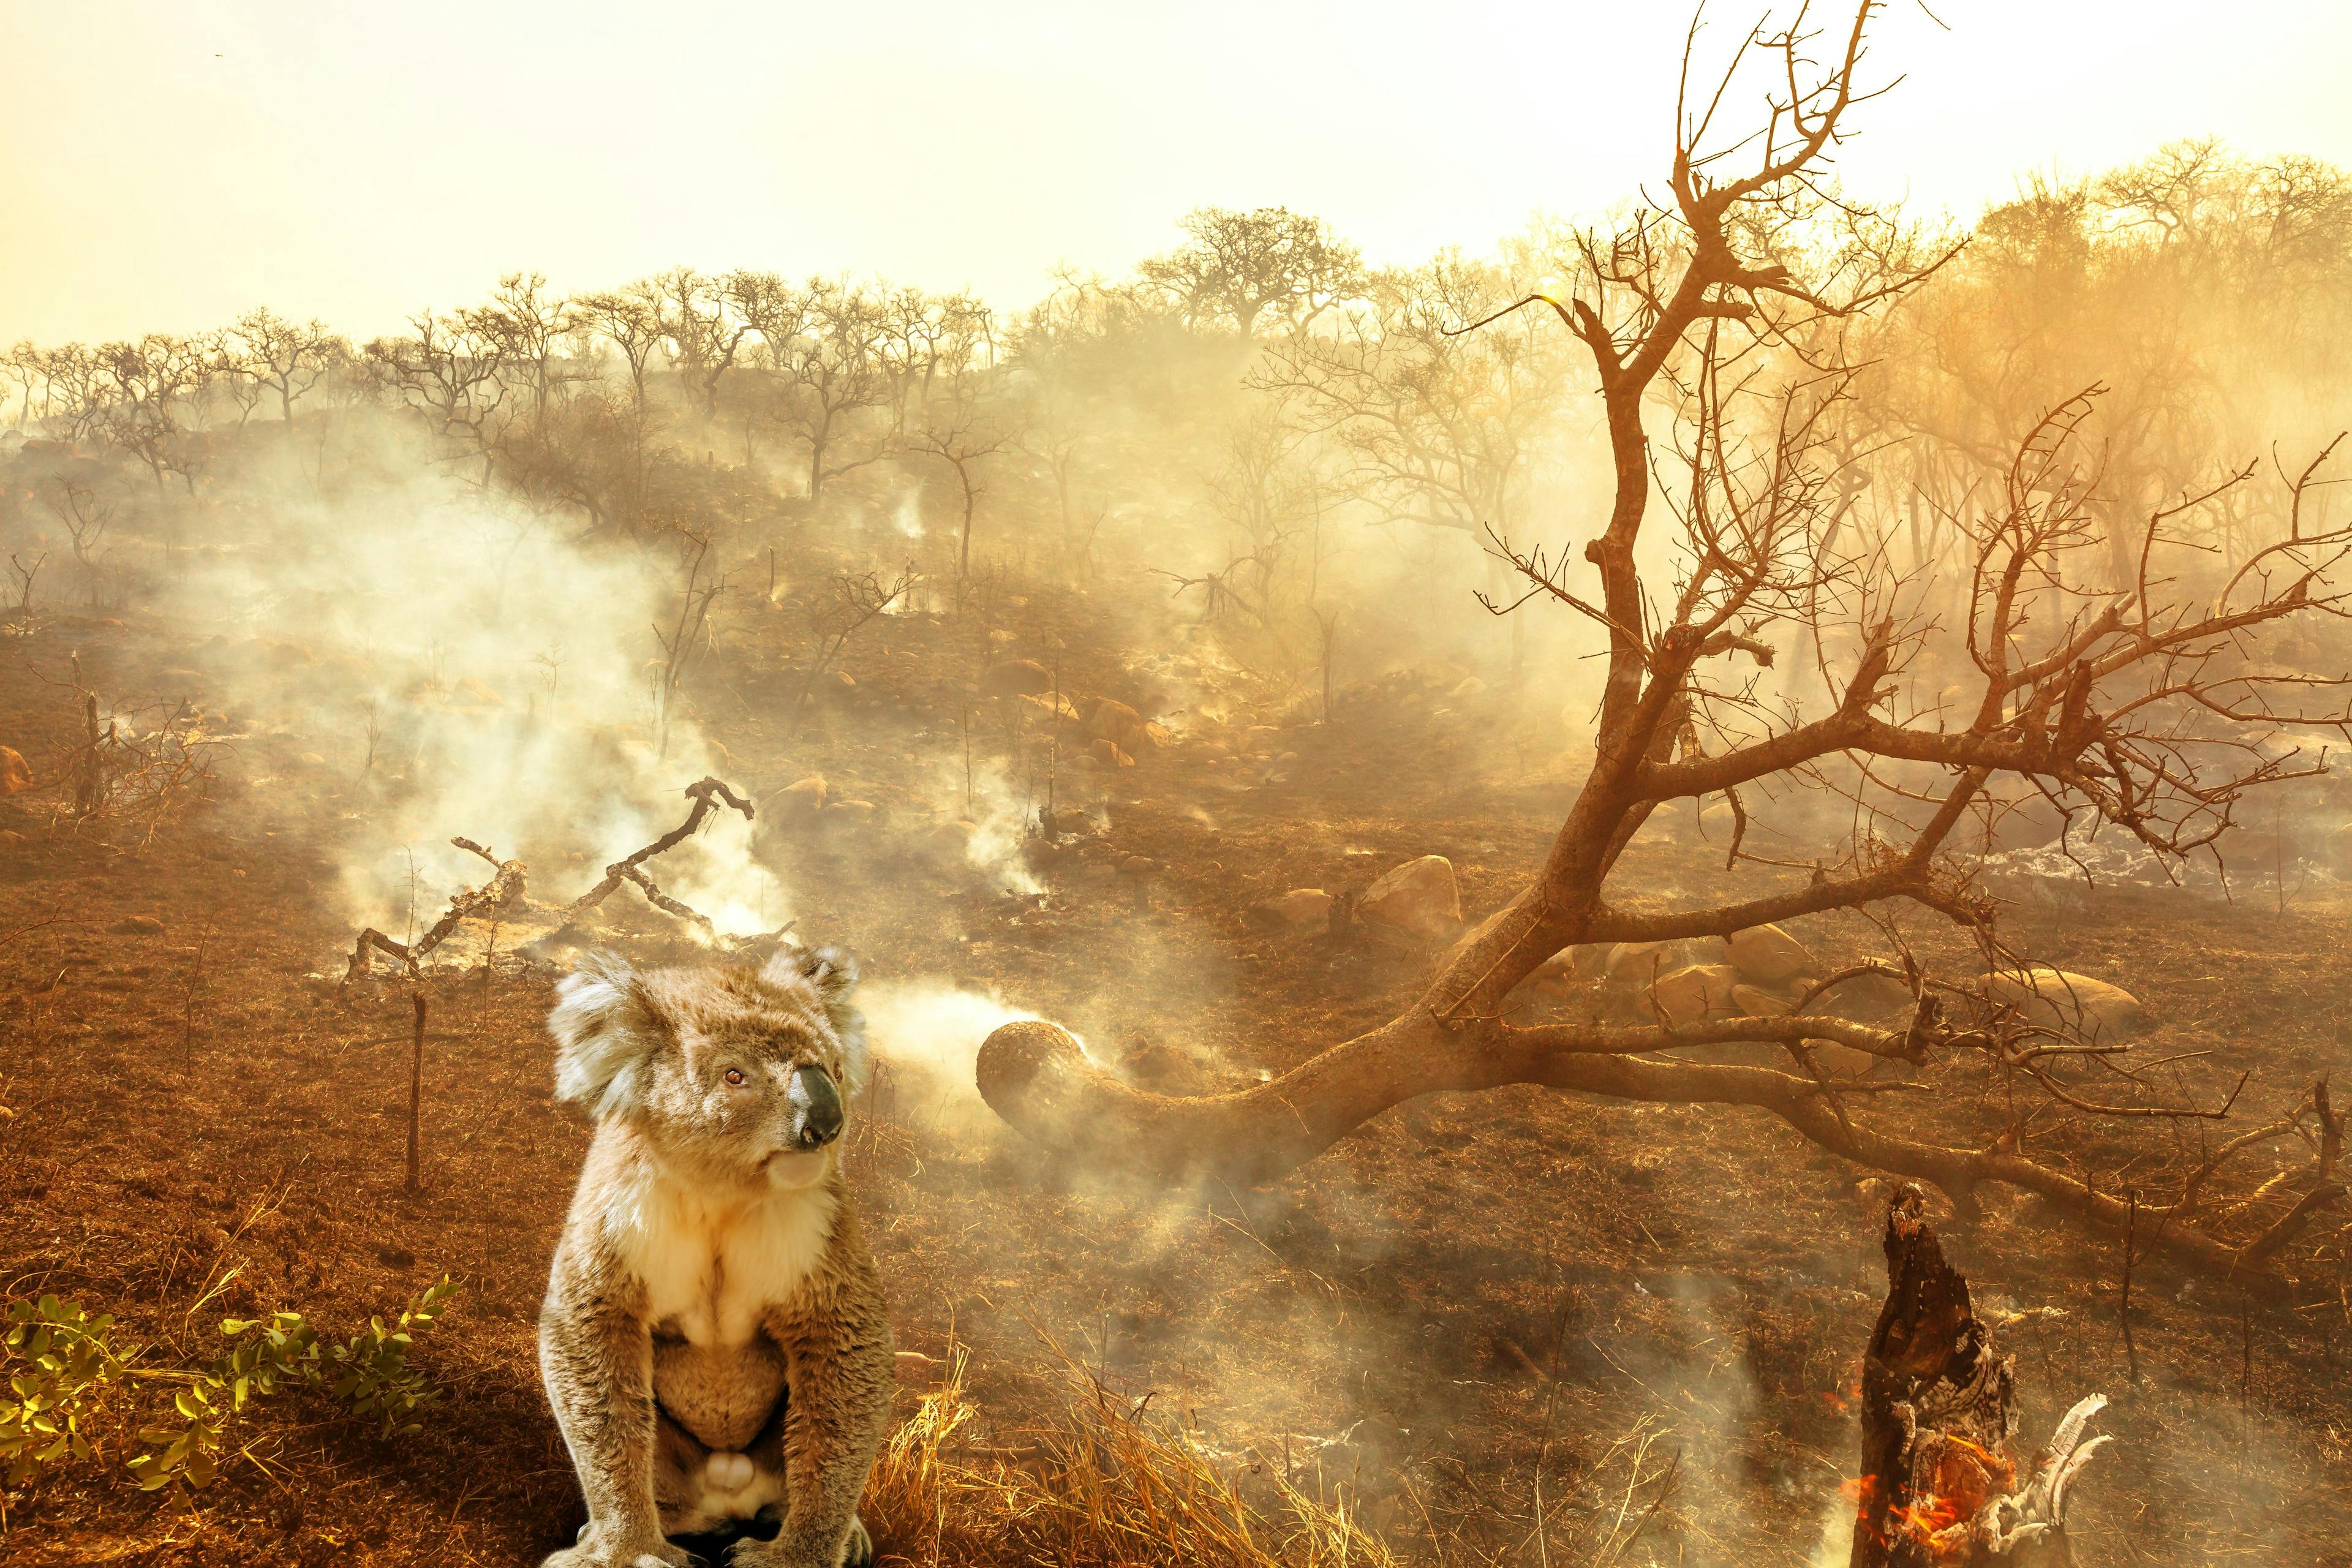 Podcast: Australian fires’ toll on veterinarians